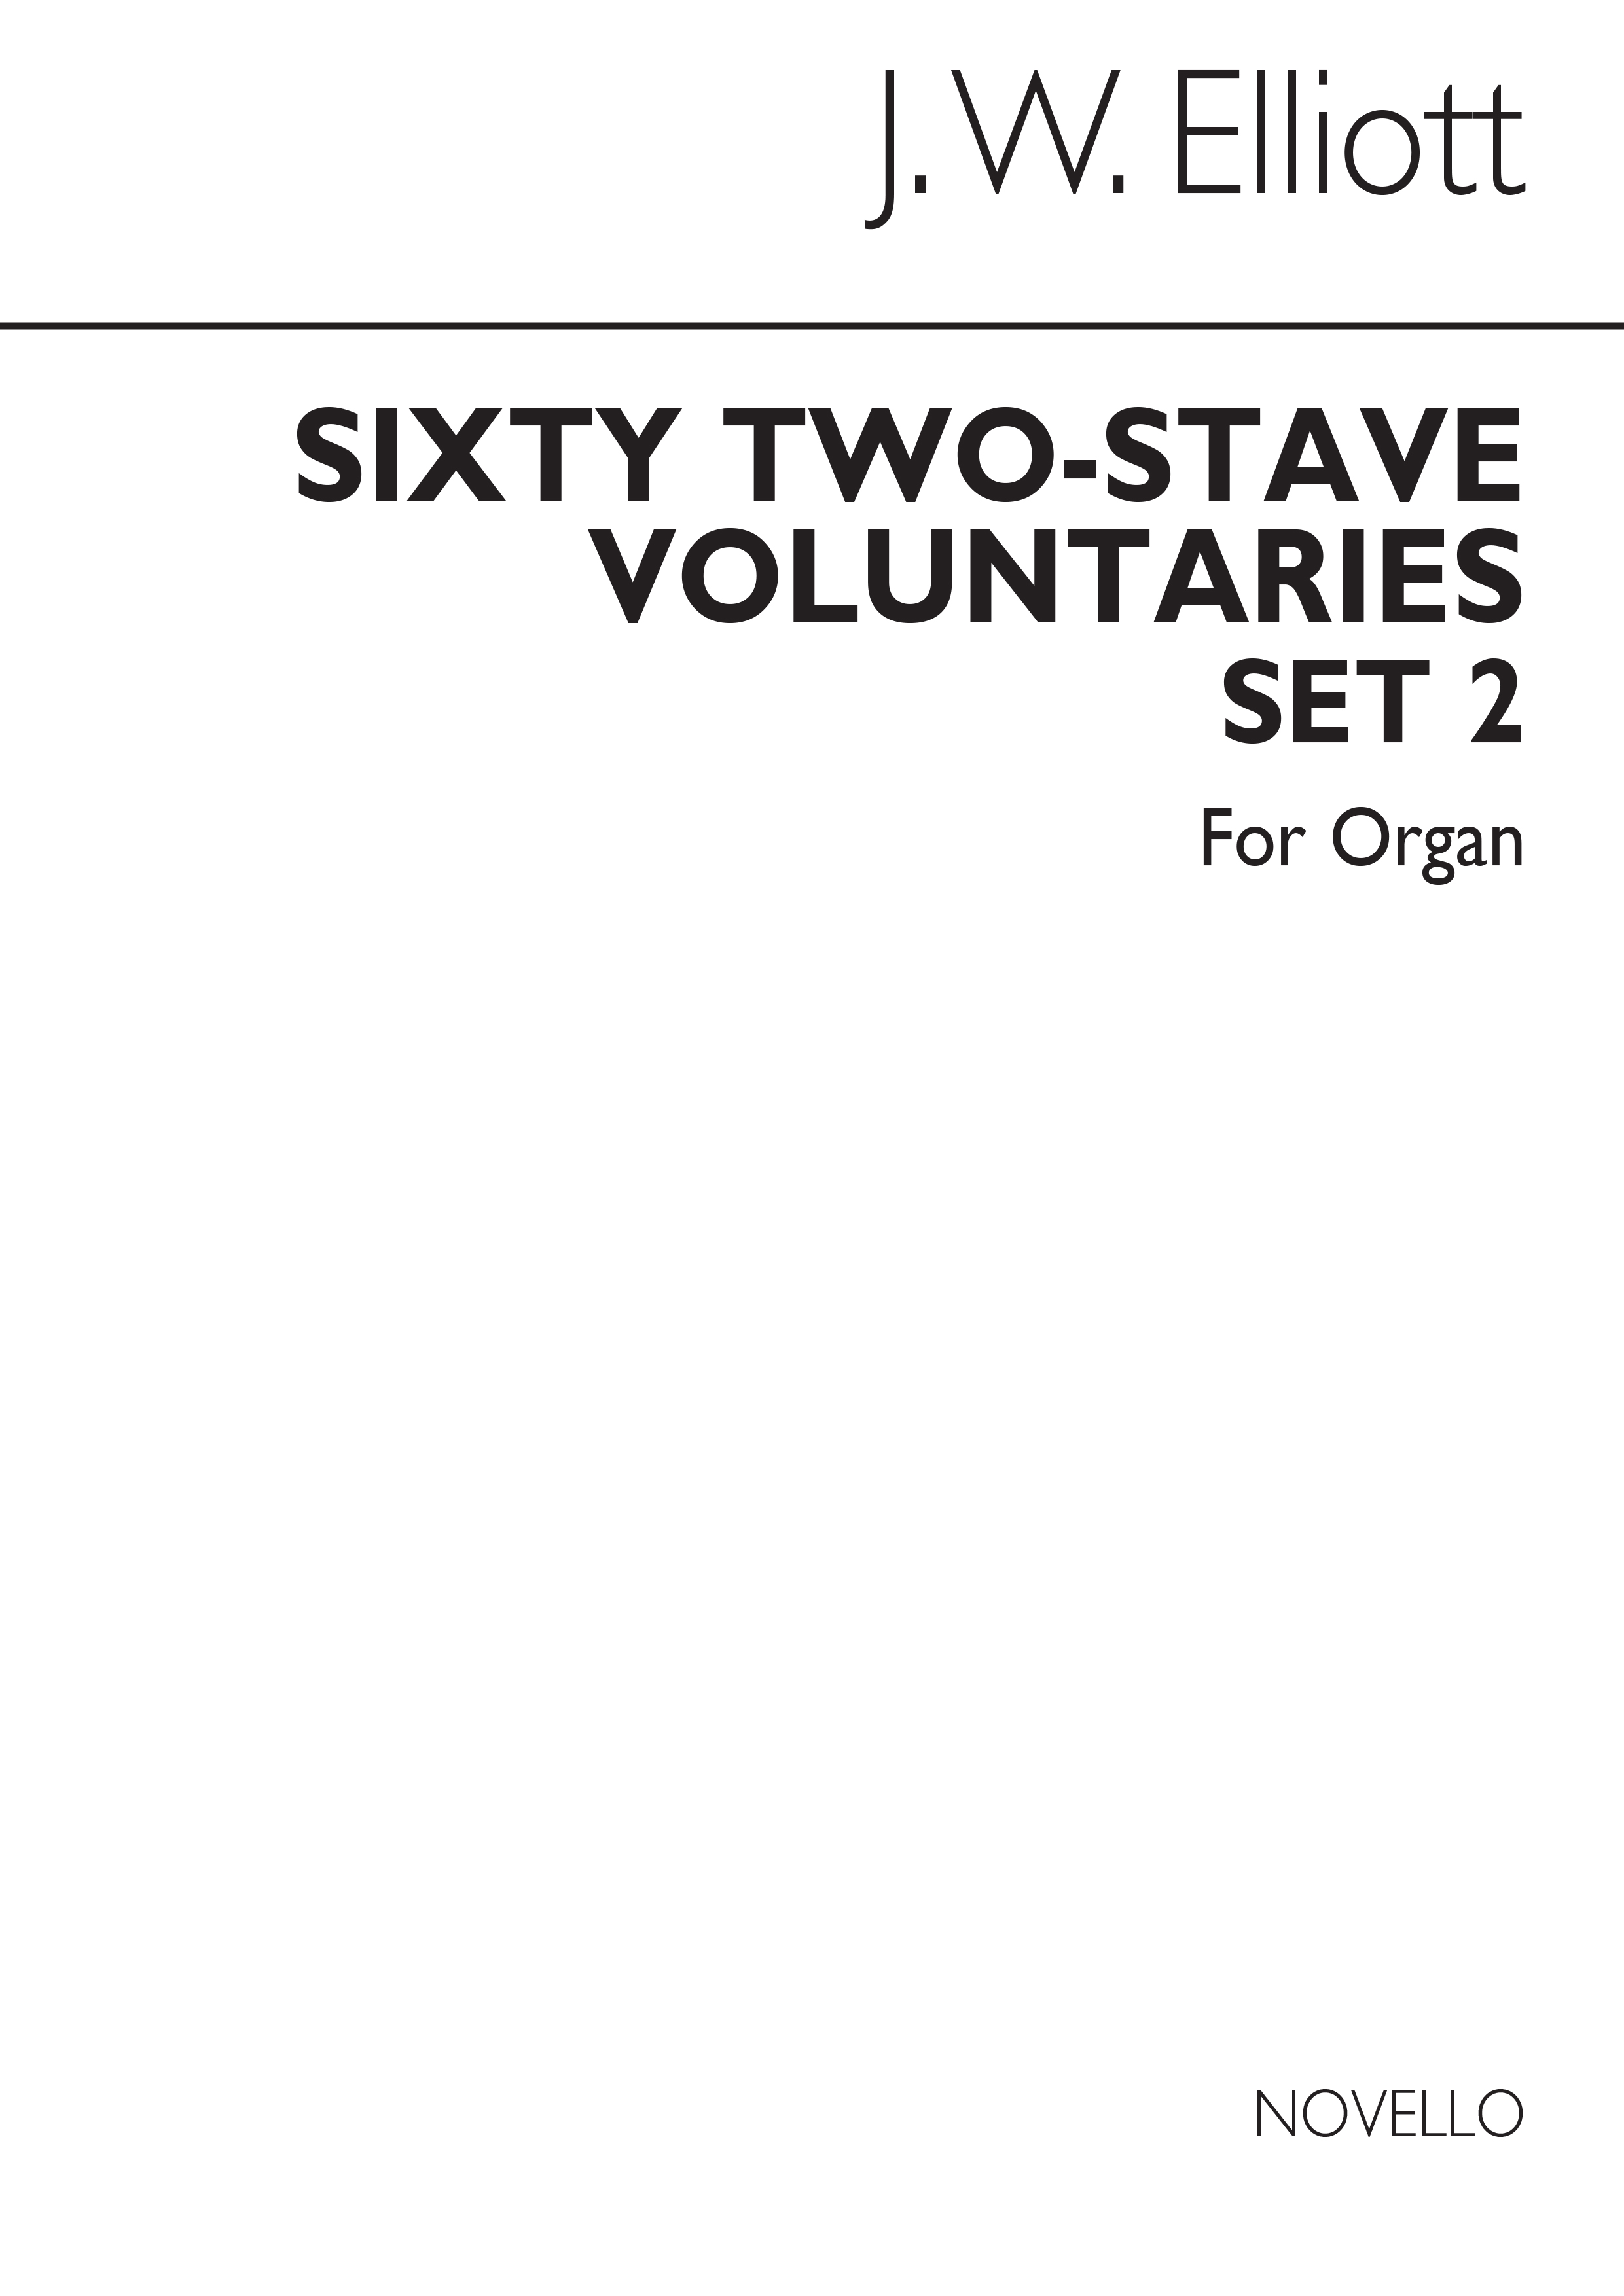 James W. Elliott: Sixty 2-Stave Voluntaries For Harmonium Set 2: Organ: